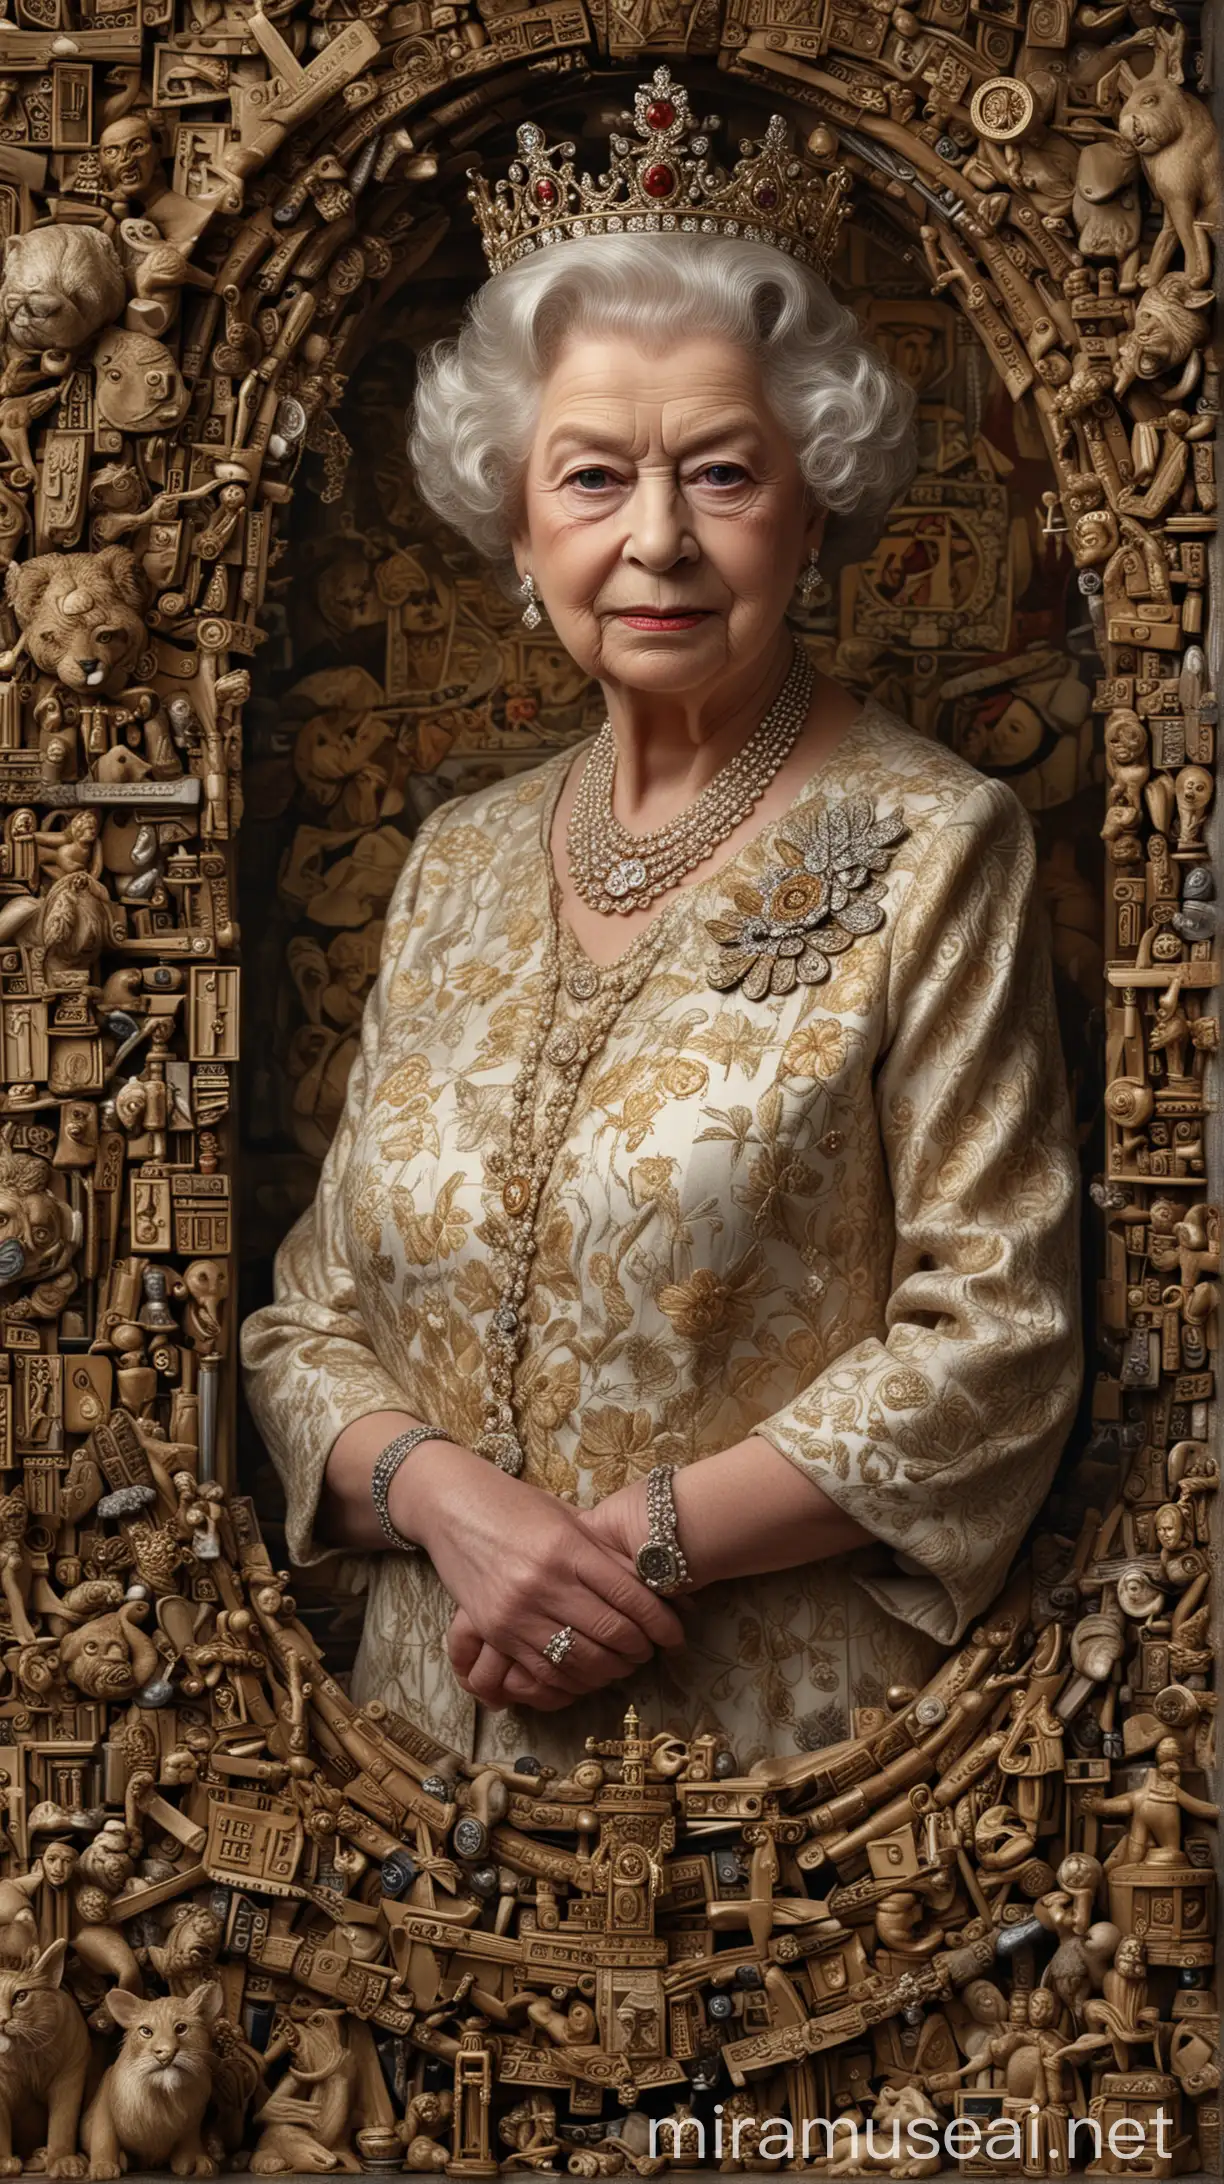 Portrait of Queen Elizabeth II Symbolic Representation of Reign and Legacy